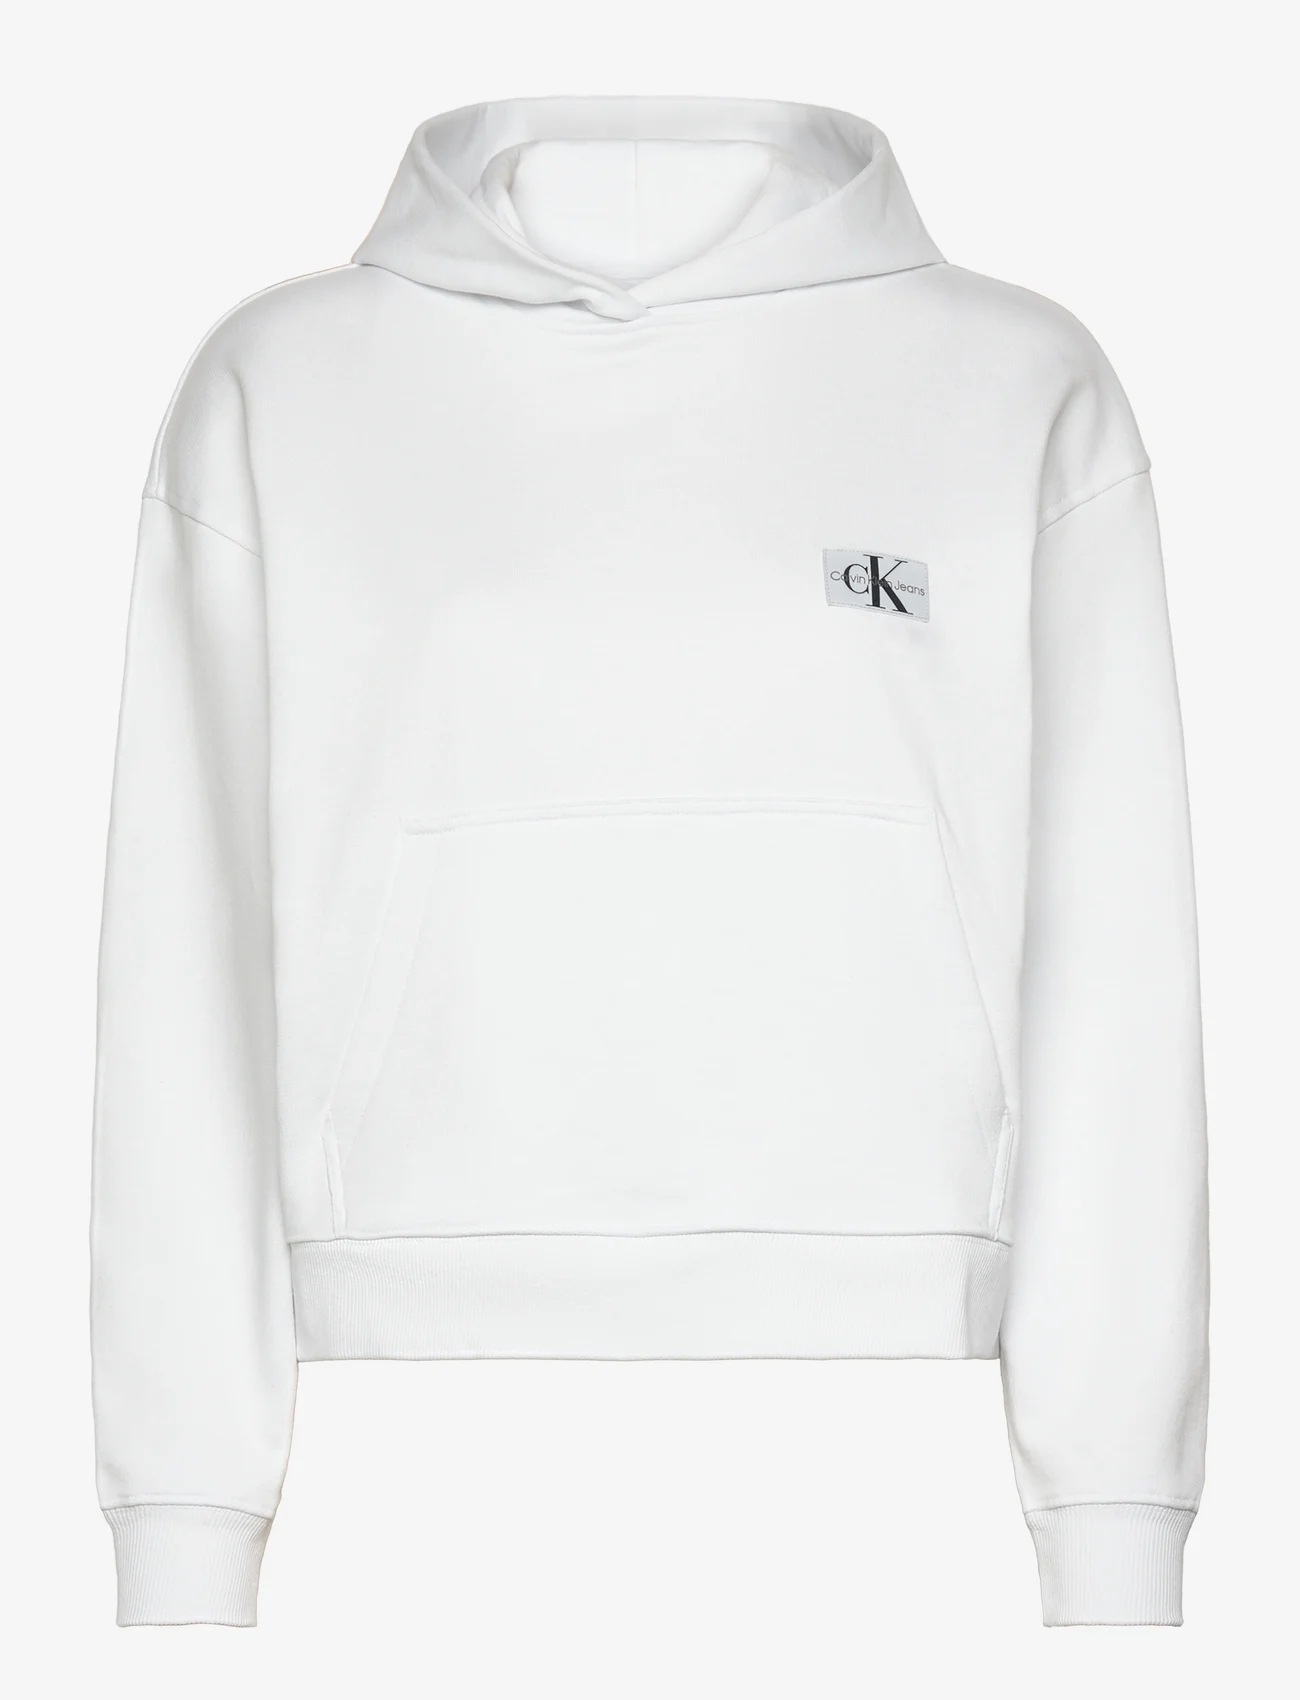 Calvin Klein Jeans - WOVEN LABEL HOODIE - hoodies - bright white - 0